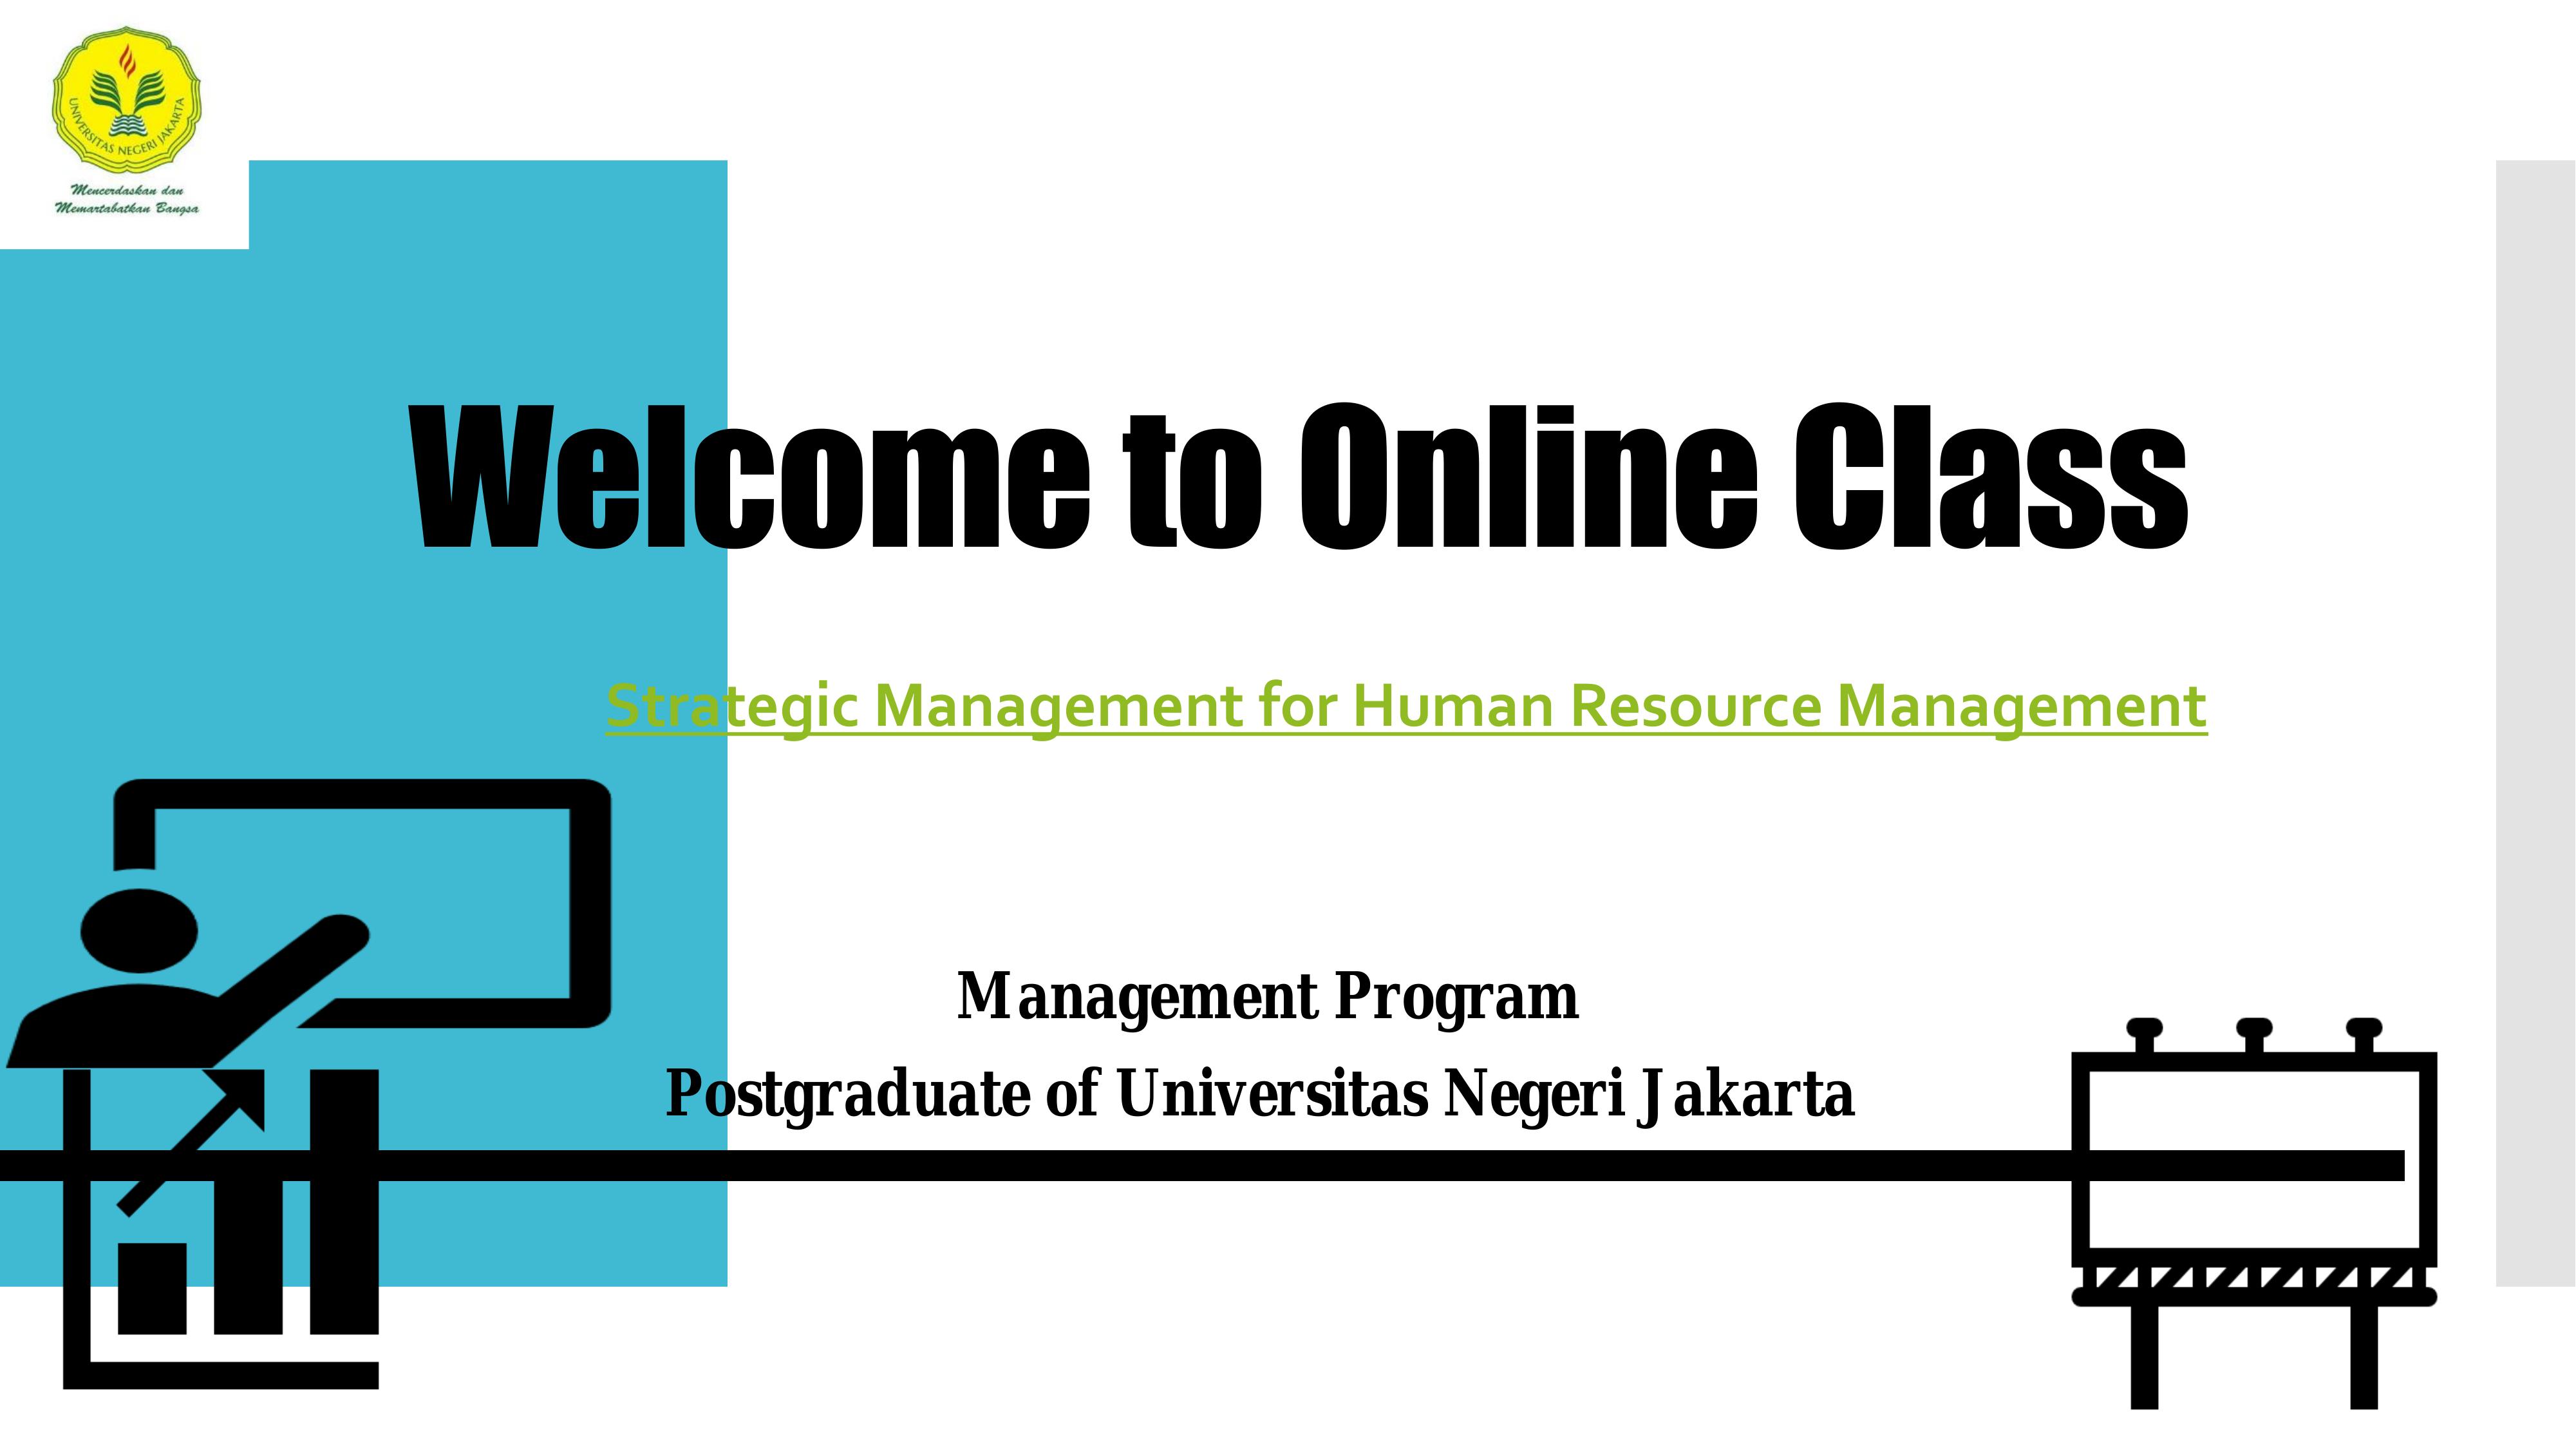 Strategic Management for Human Resource Management 